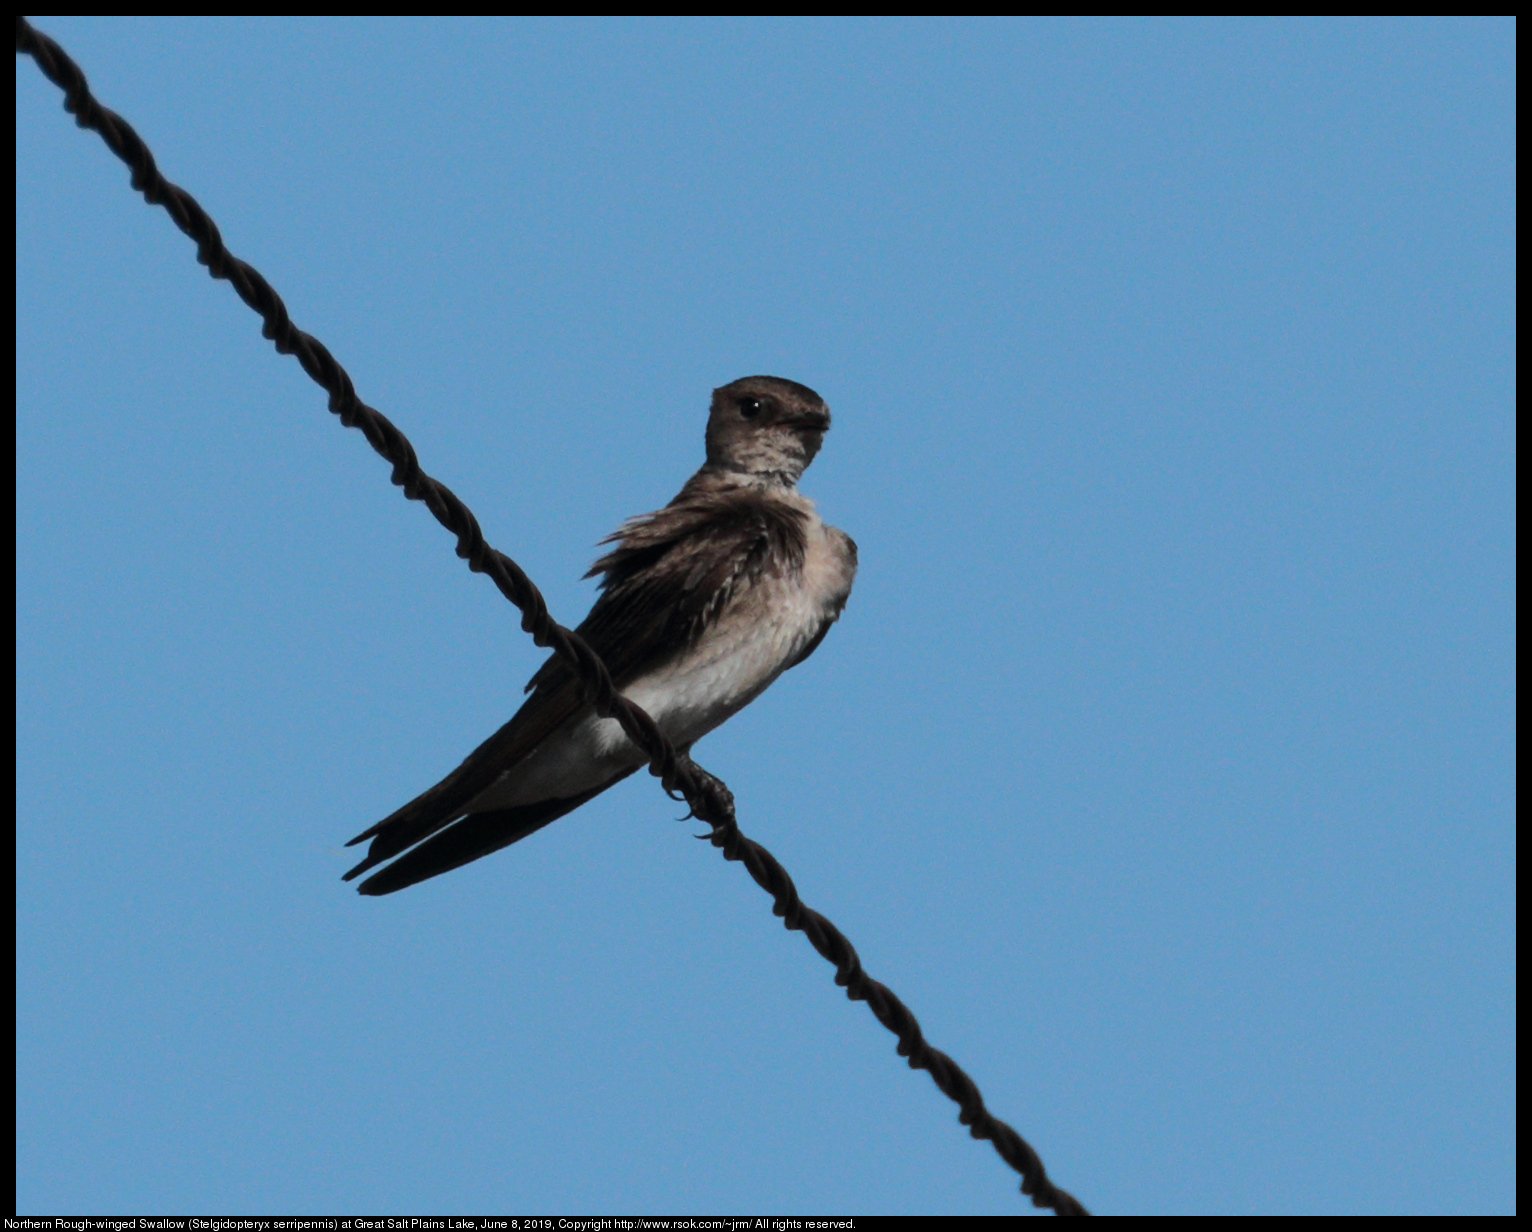 Northern Rough-winged Swallow (Stelgidopteryx serripennis) at Great Salt Plains Lake, June 8, 2019